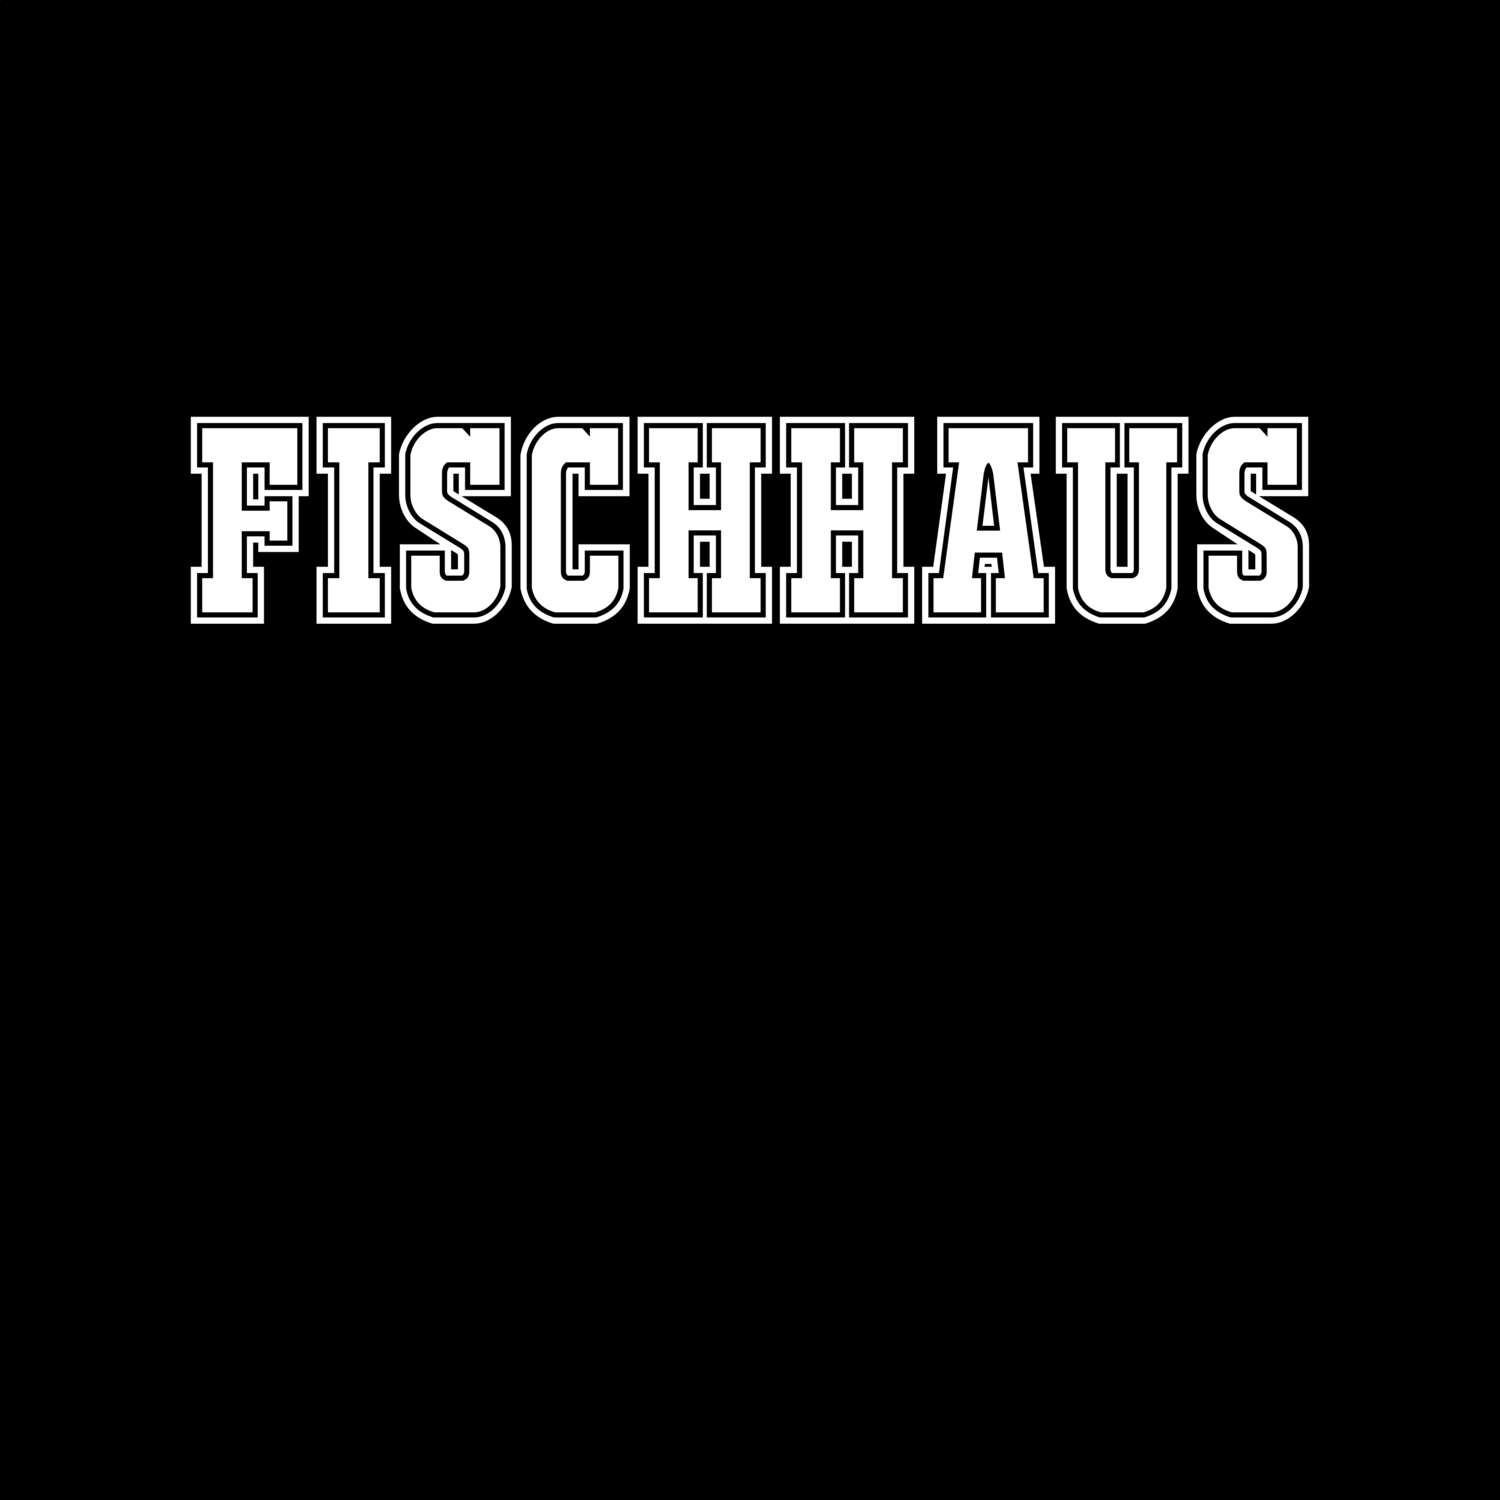 Fischhaus T-Shirt »Classic«